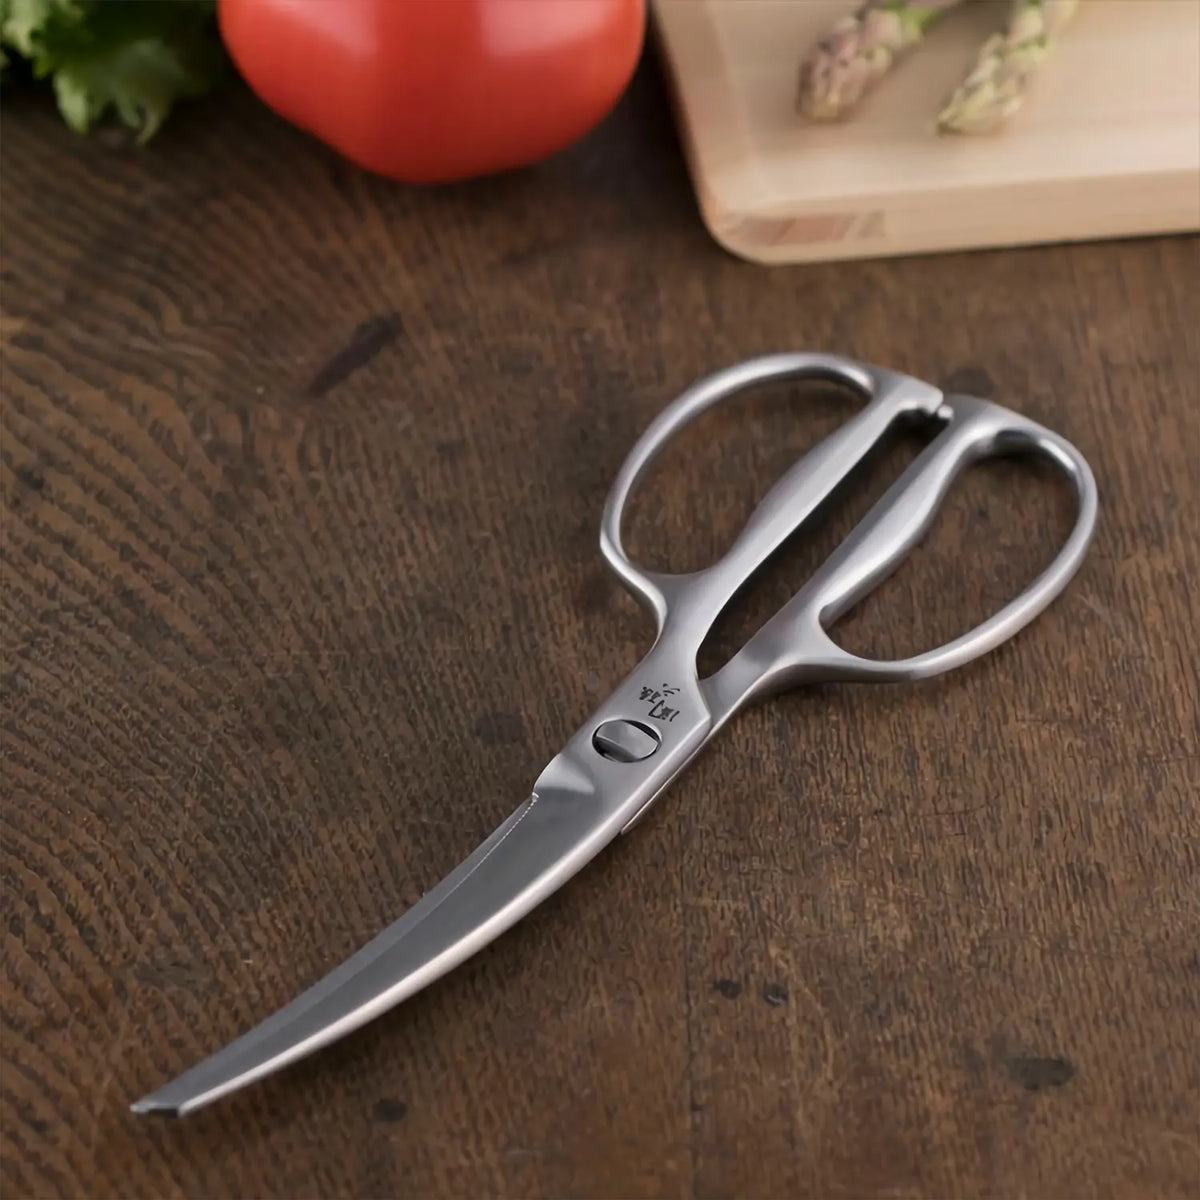 Seki Magoroku All Stainless Steel Kitchen Scissors